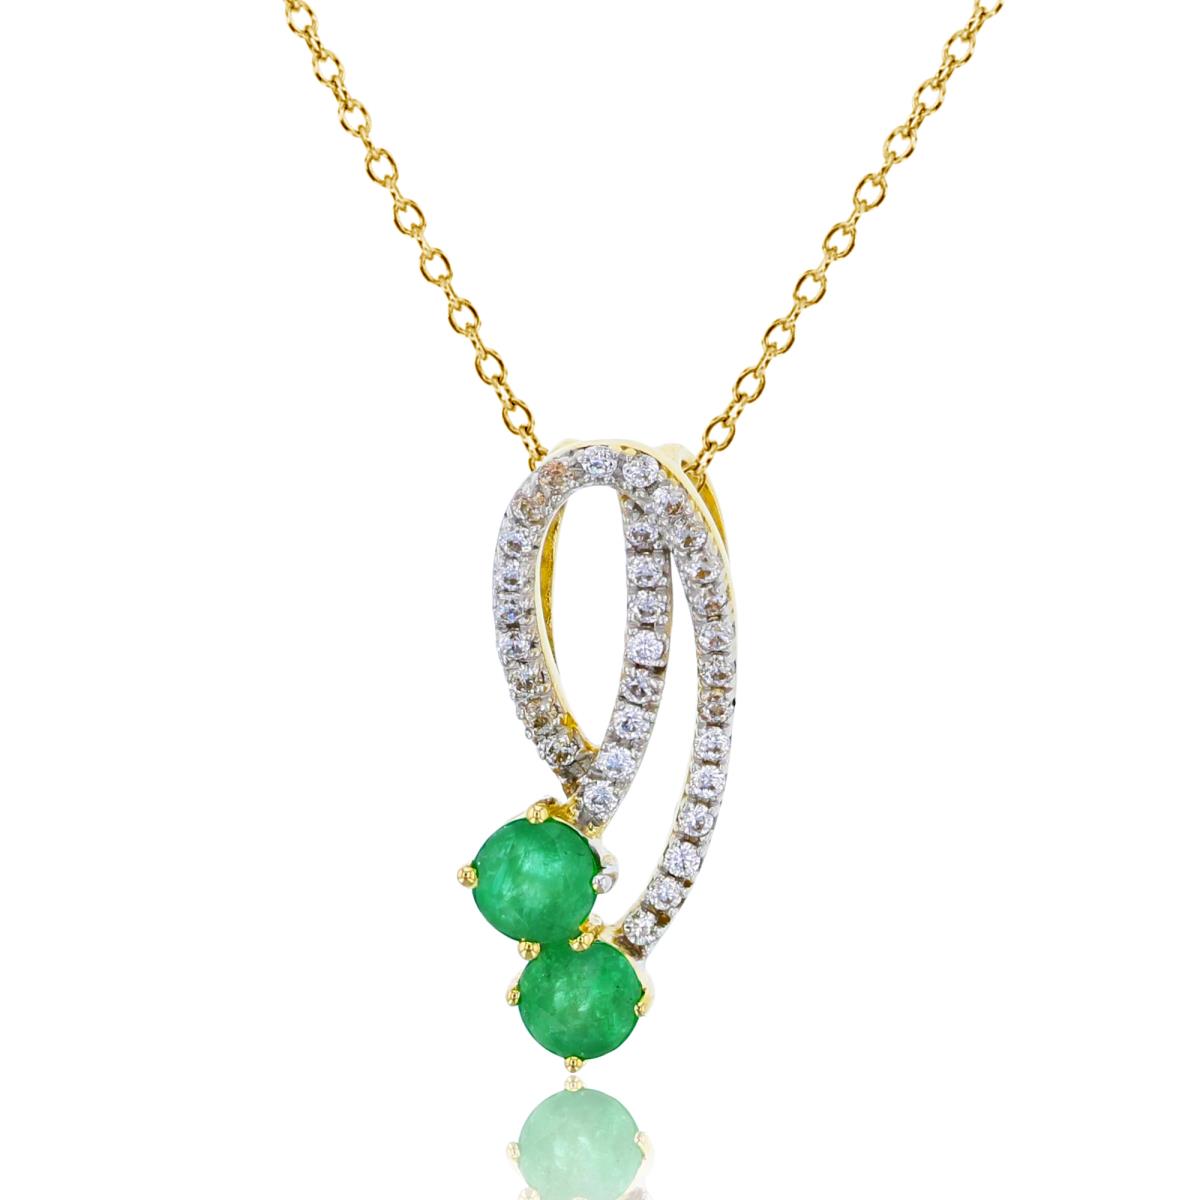 10K Yellow Gold 0.16cttw Rnd Diamonds & 3.5mm Rnd Emerald Fashion 18"Necklace